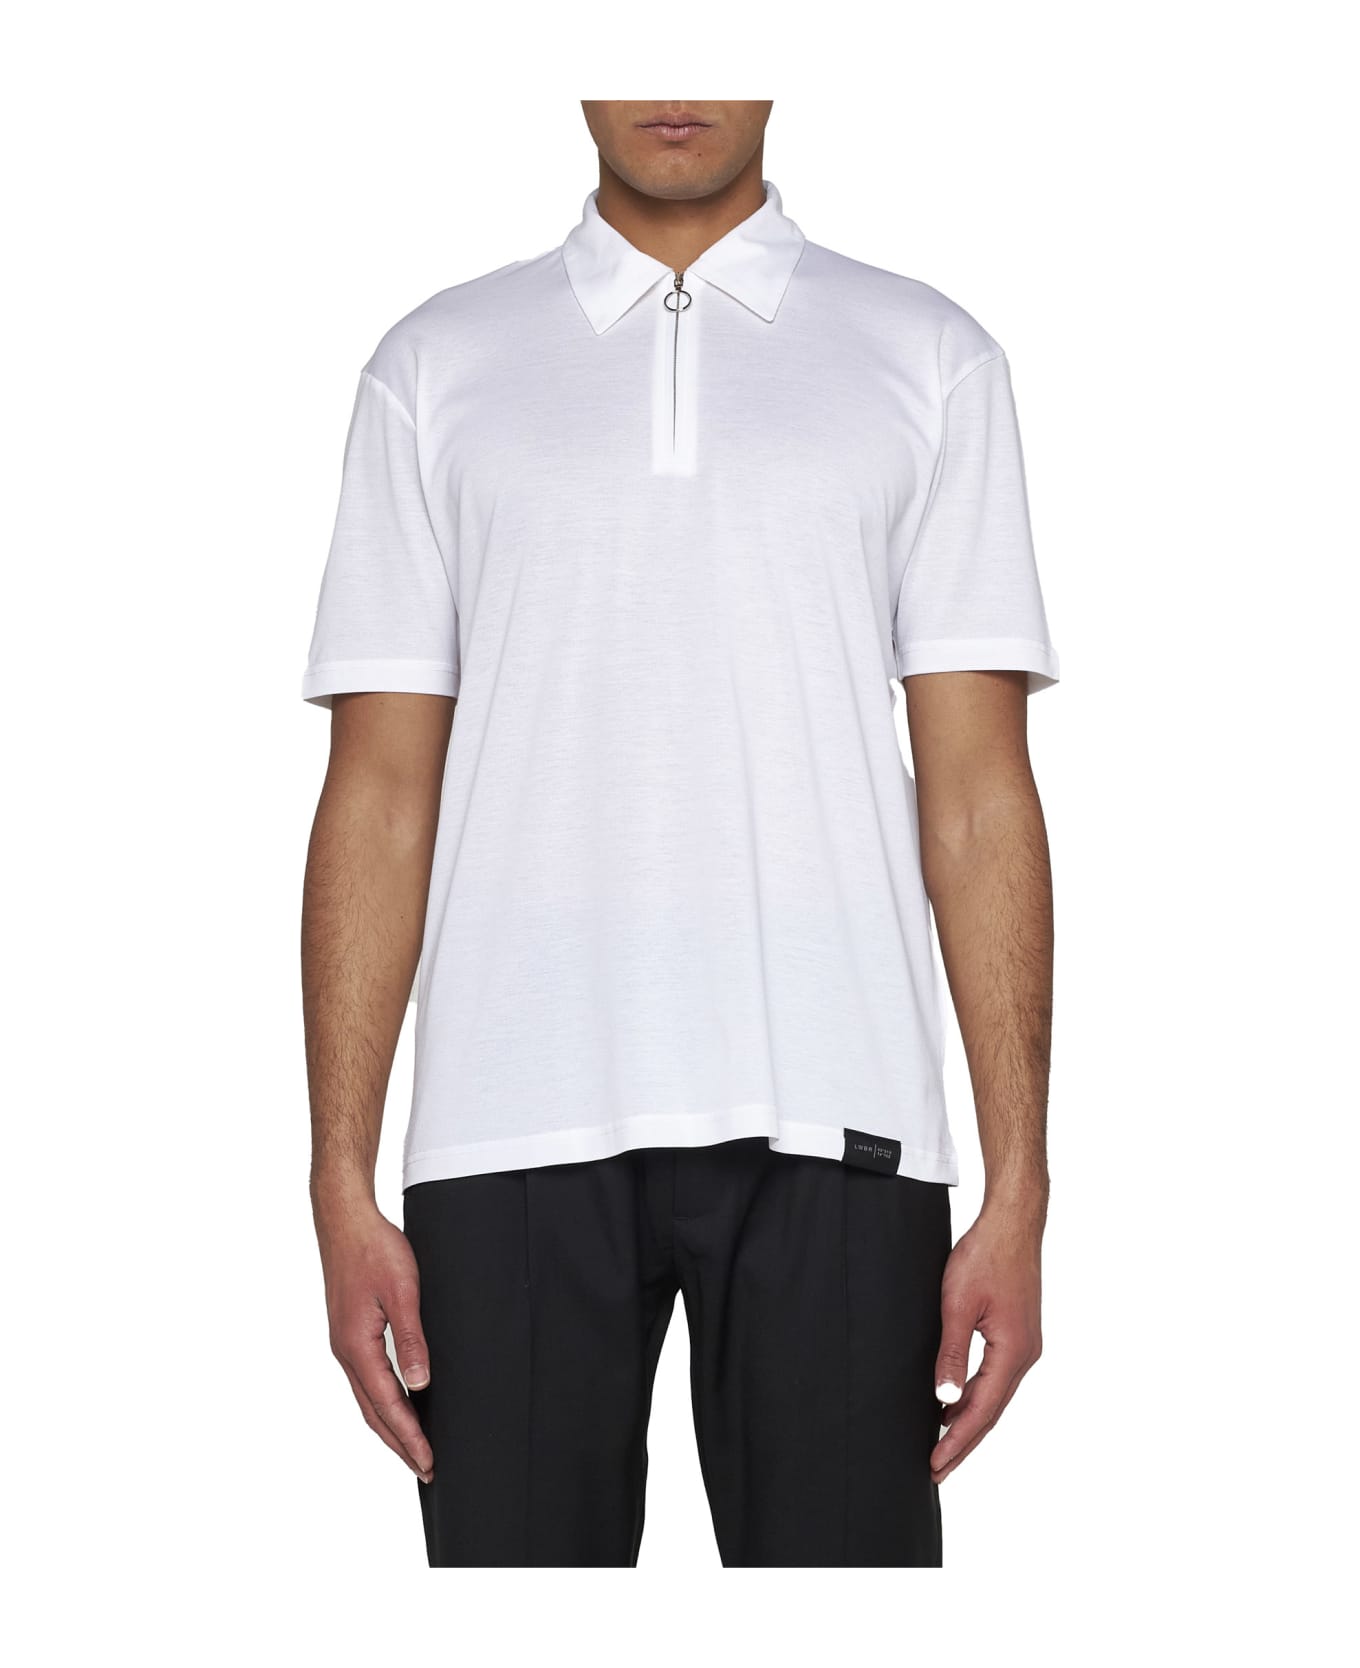 Low Brand Polo Shirt - White